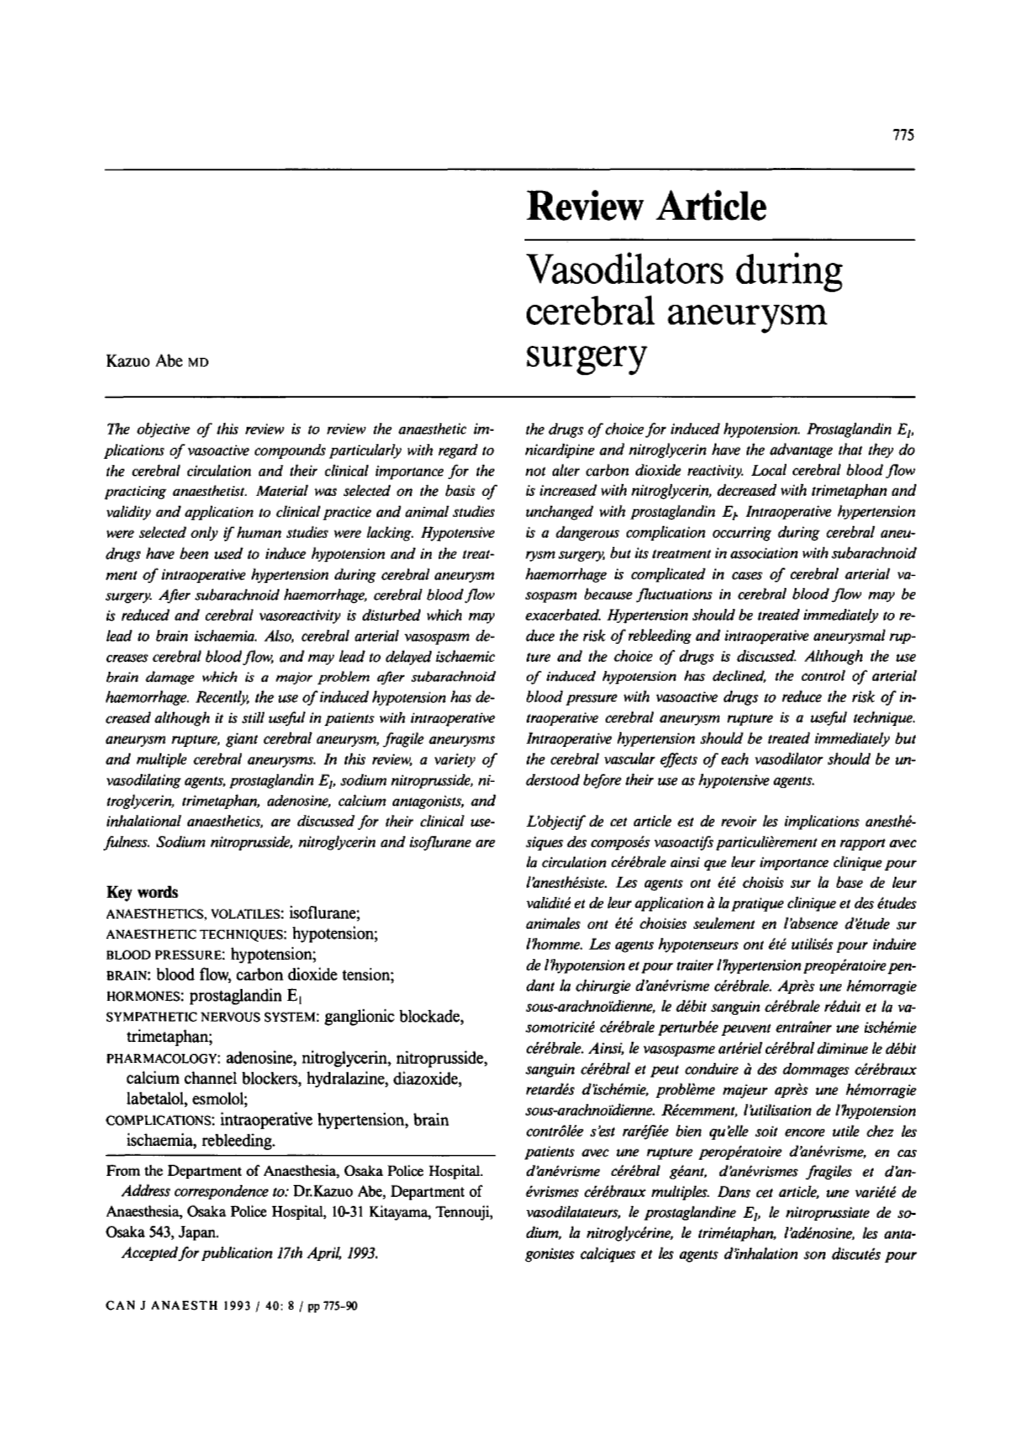 Vasodilators During Cerebral Aneurysm Surgery